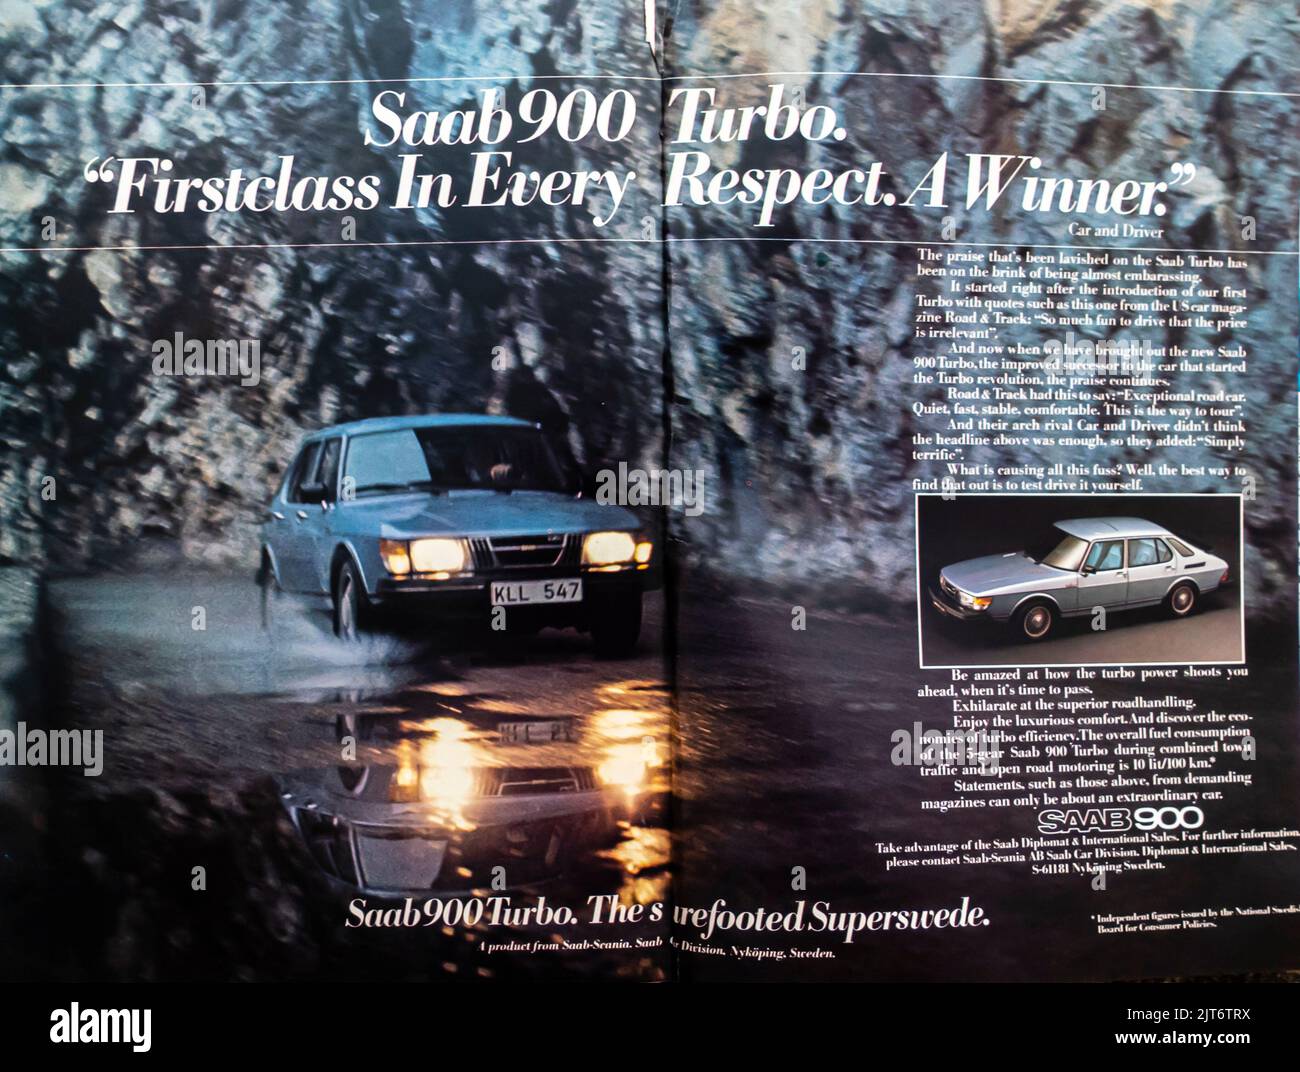 Saab 900 turbo cars advertisement placed inside NatGeo magazine, November 1980 Stock Photo